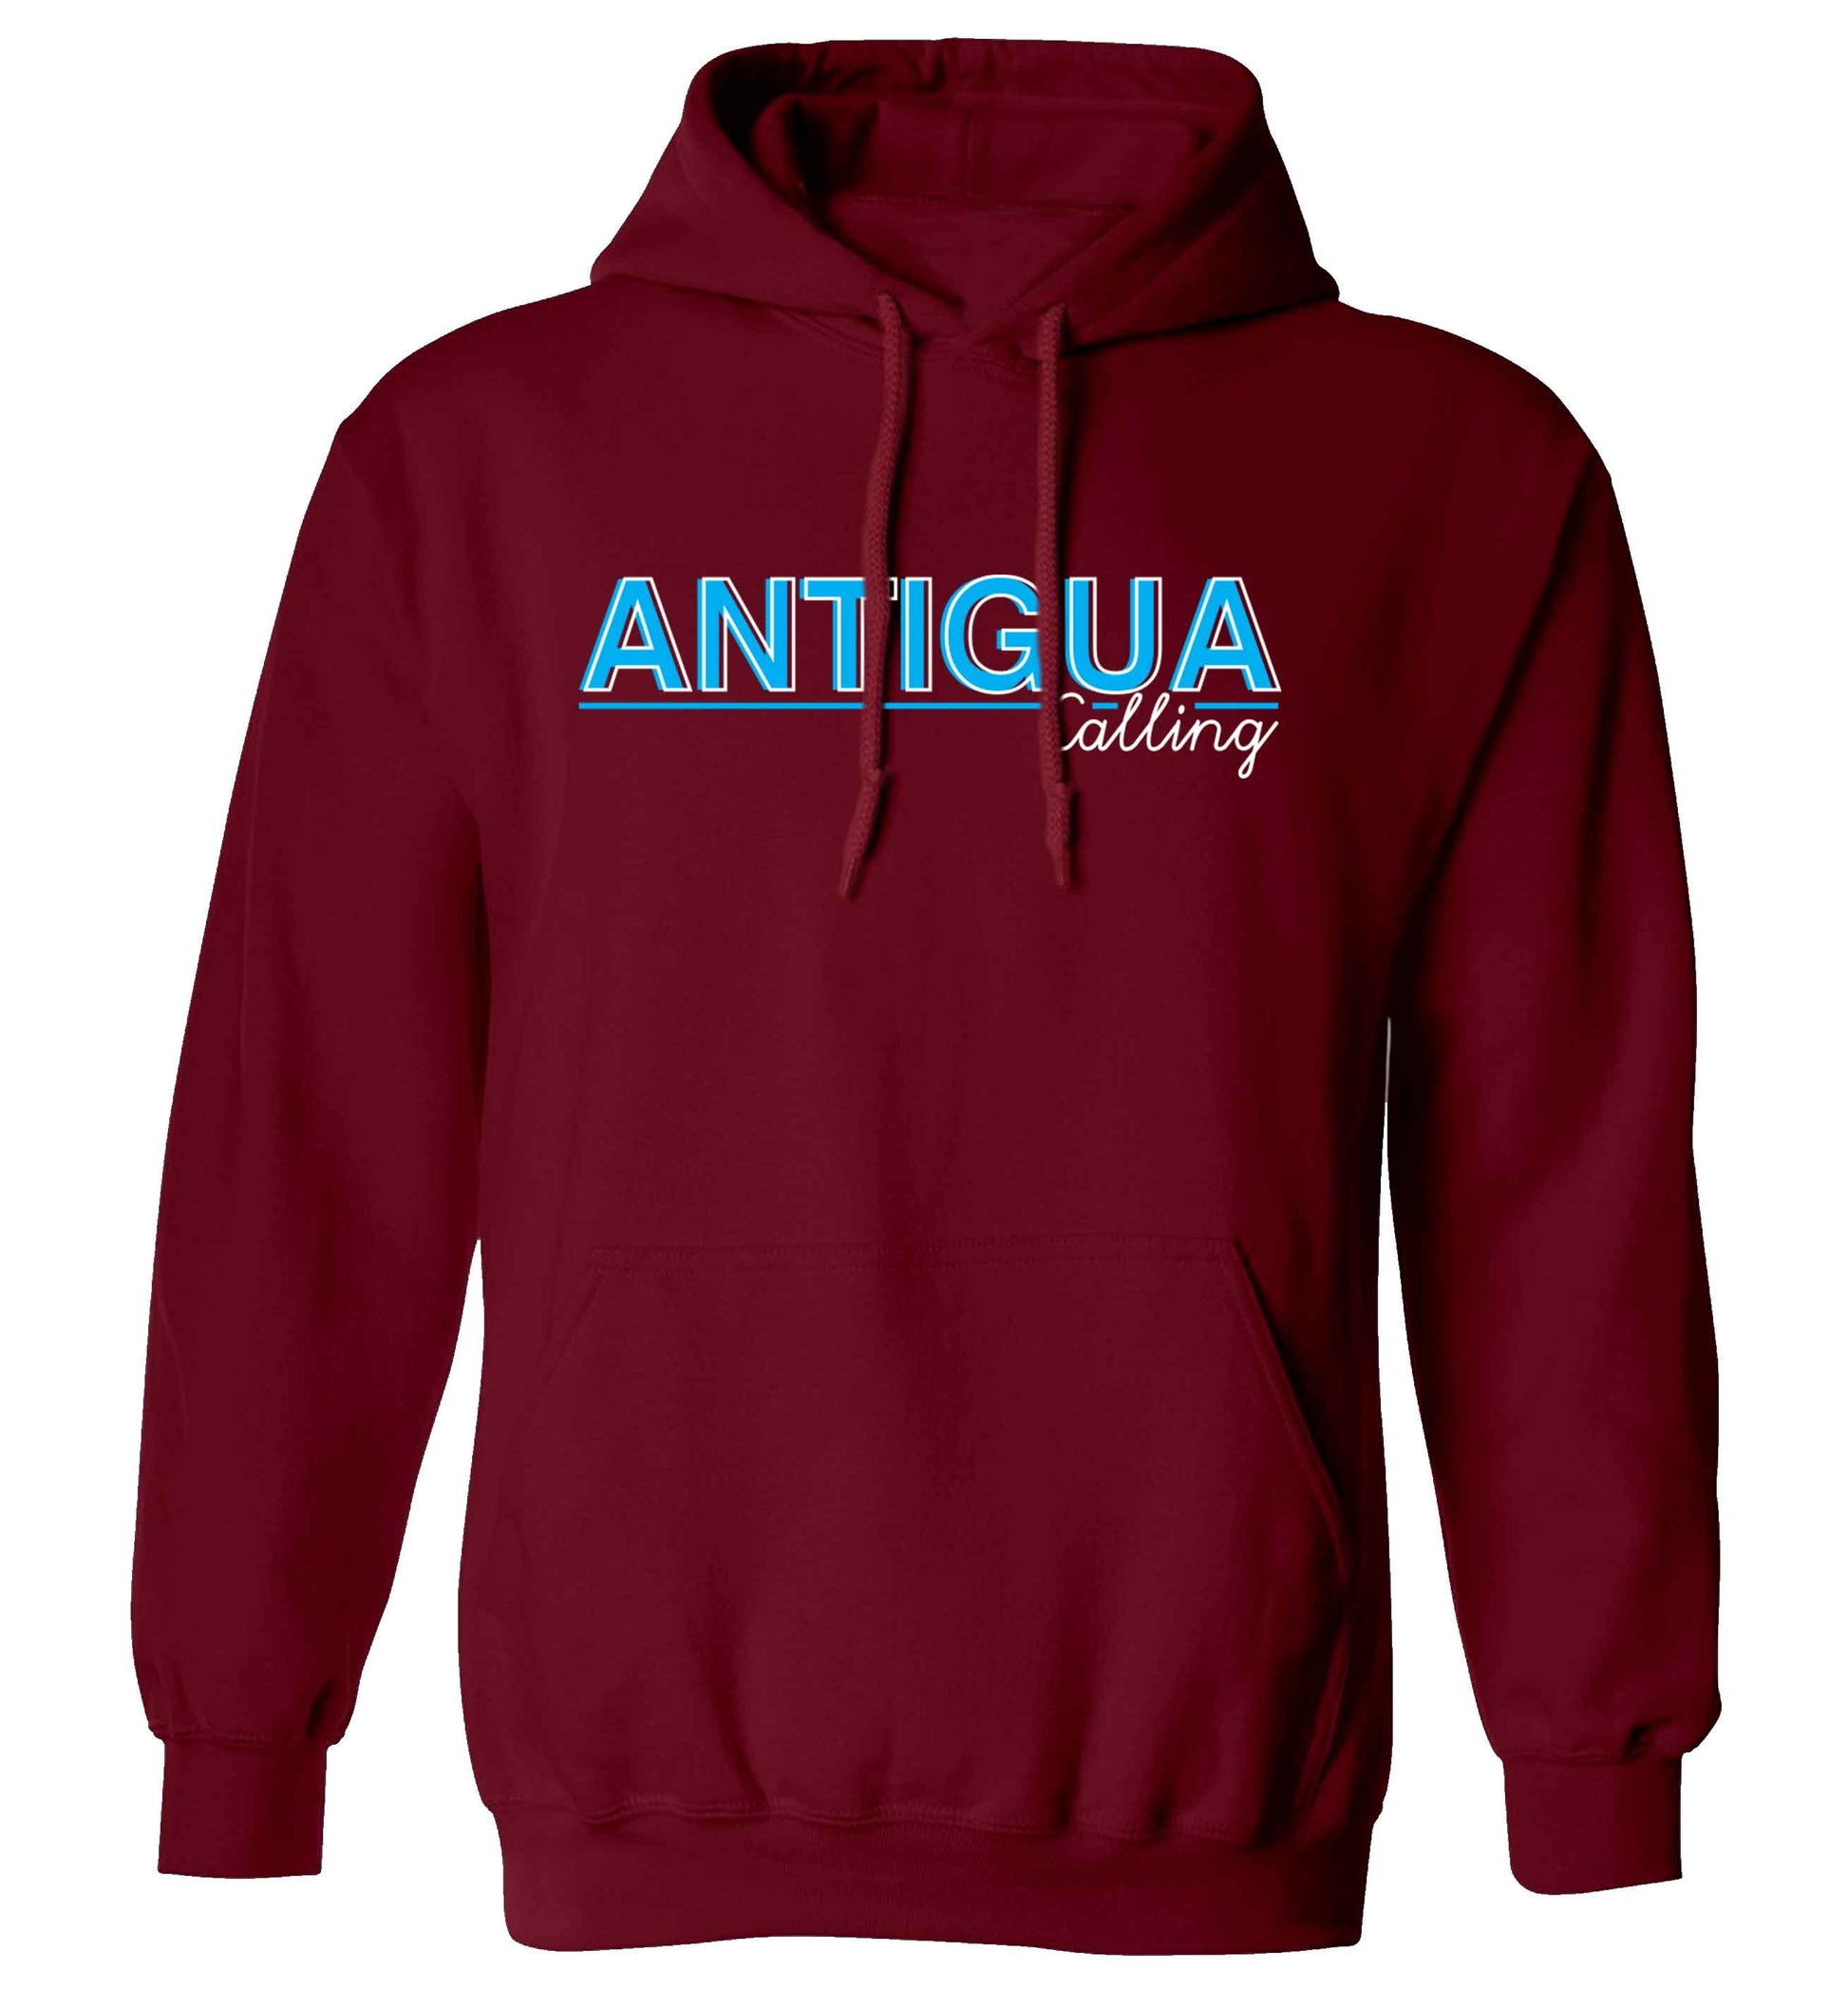 Antigua calling adults unisex maroon hoodie 2XL